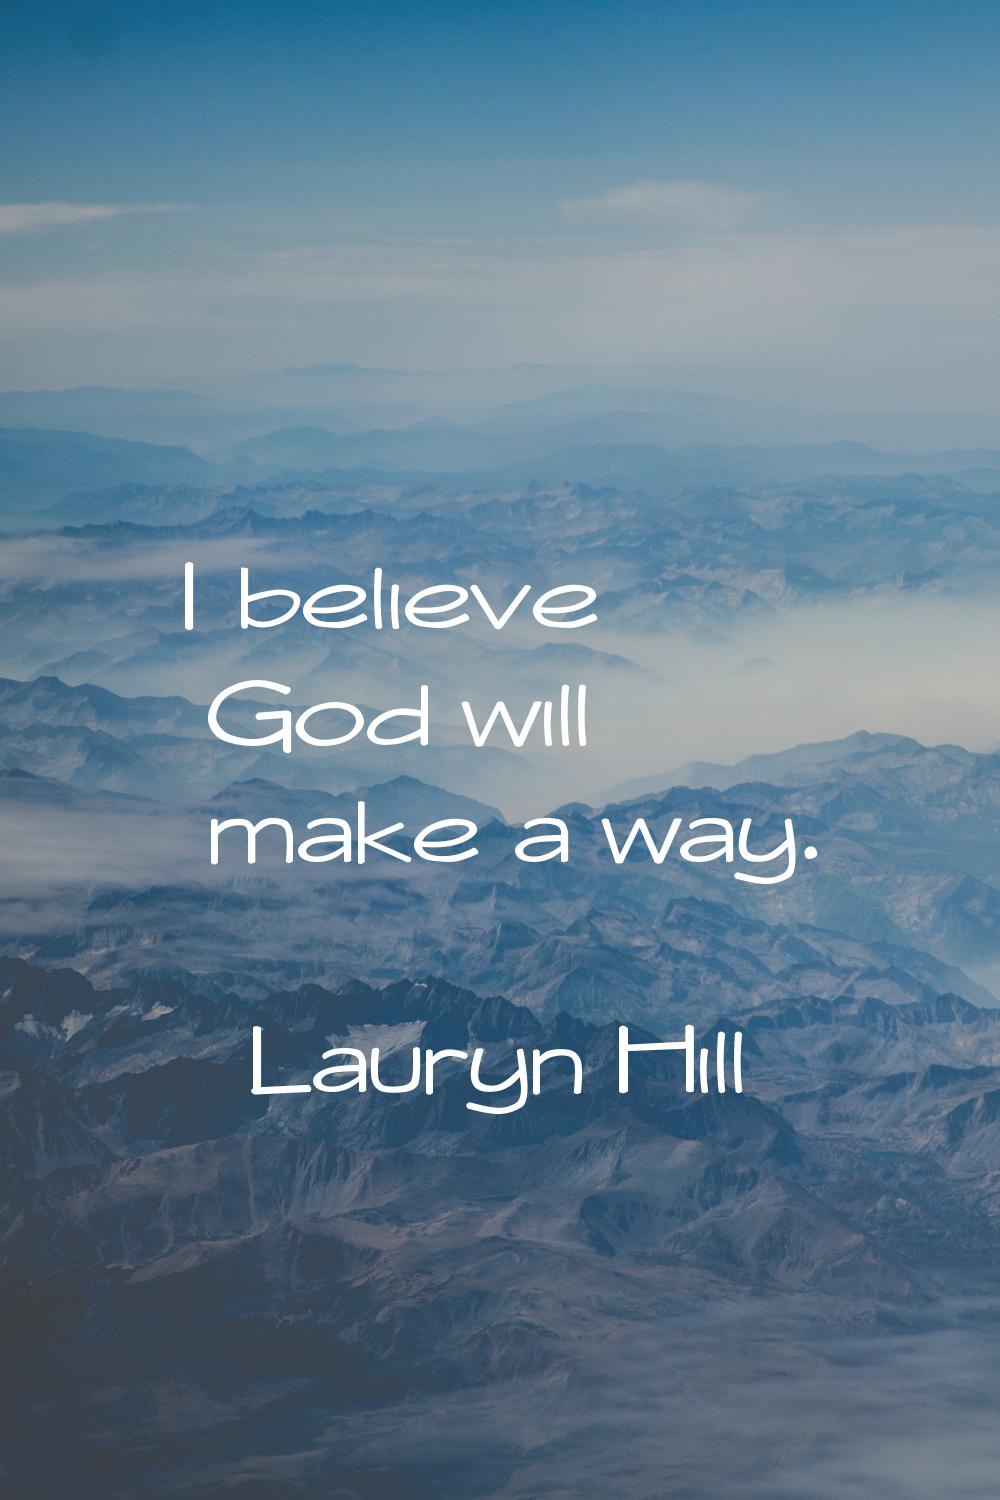 I believe God will make a way.